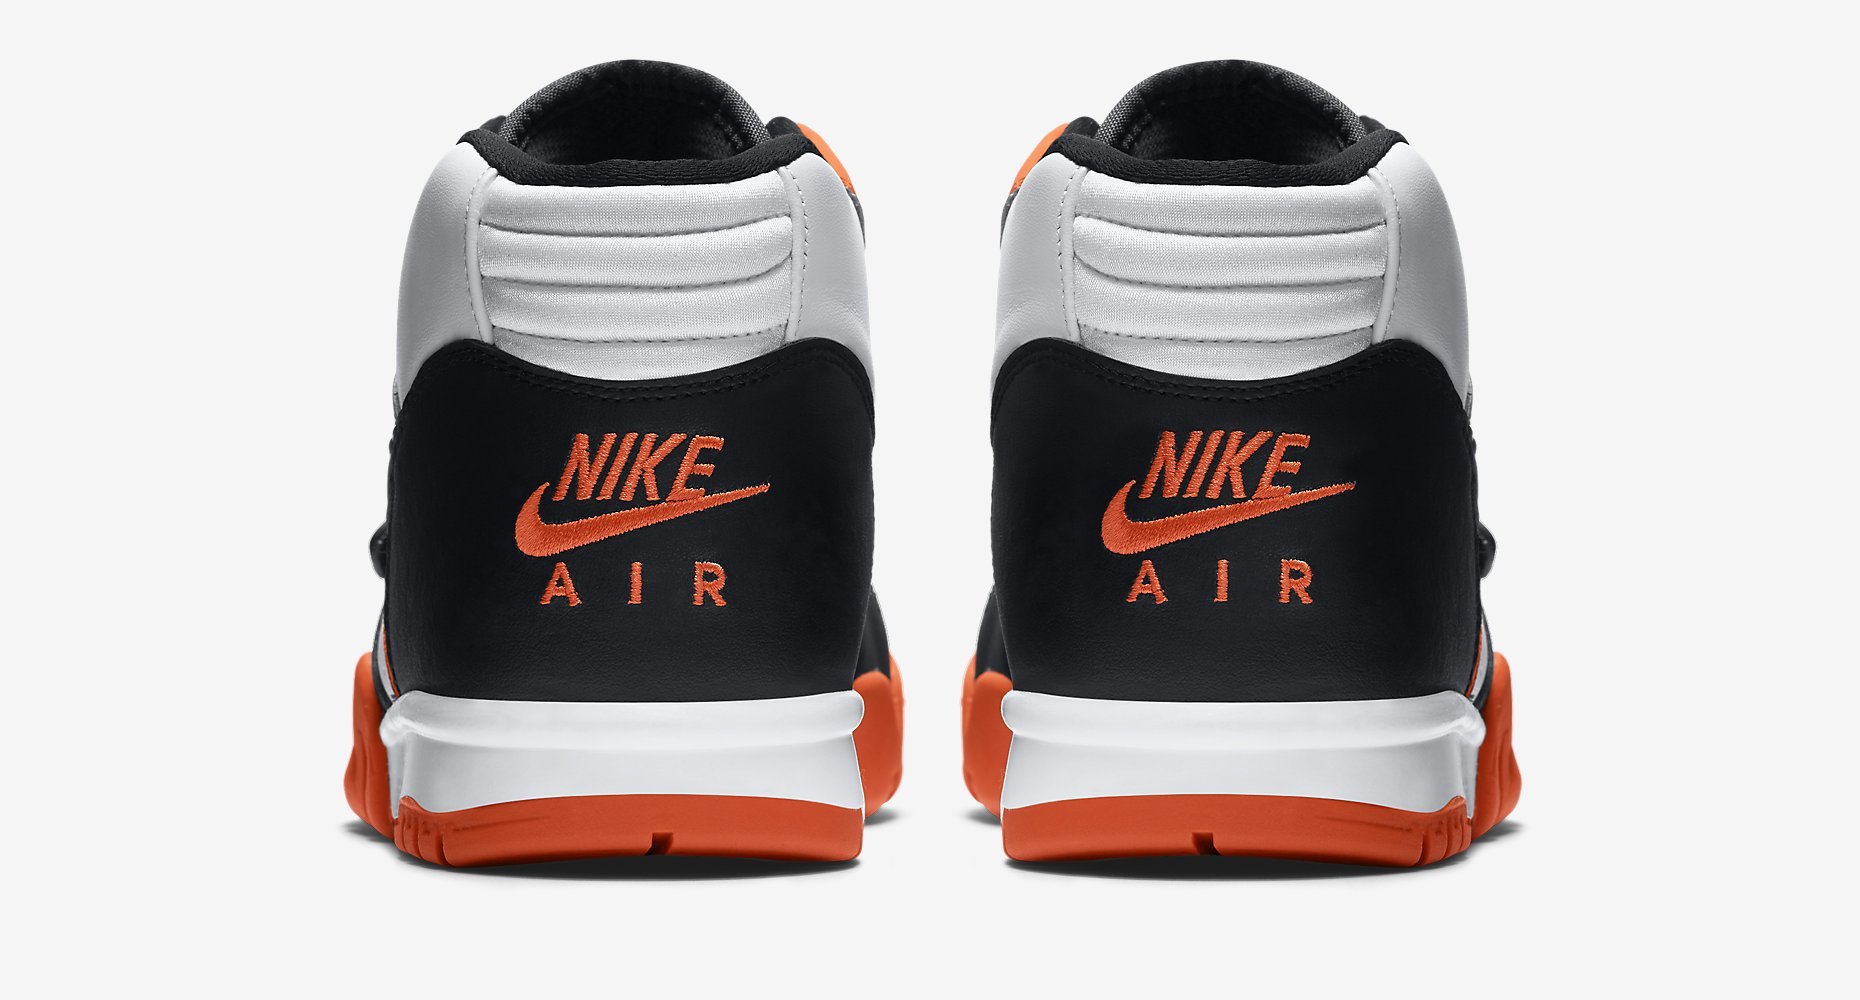 New Nike Air Trainer 1 Mid Colorway for Halloween - Air 23 - Air Jordan ...